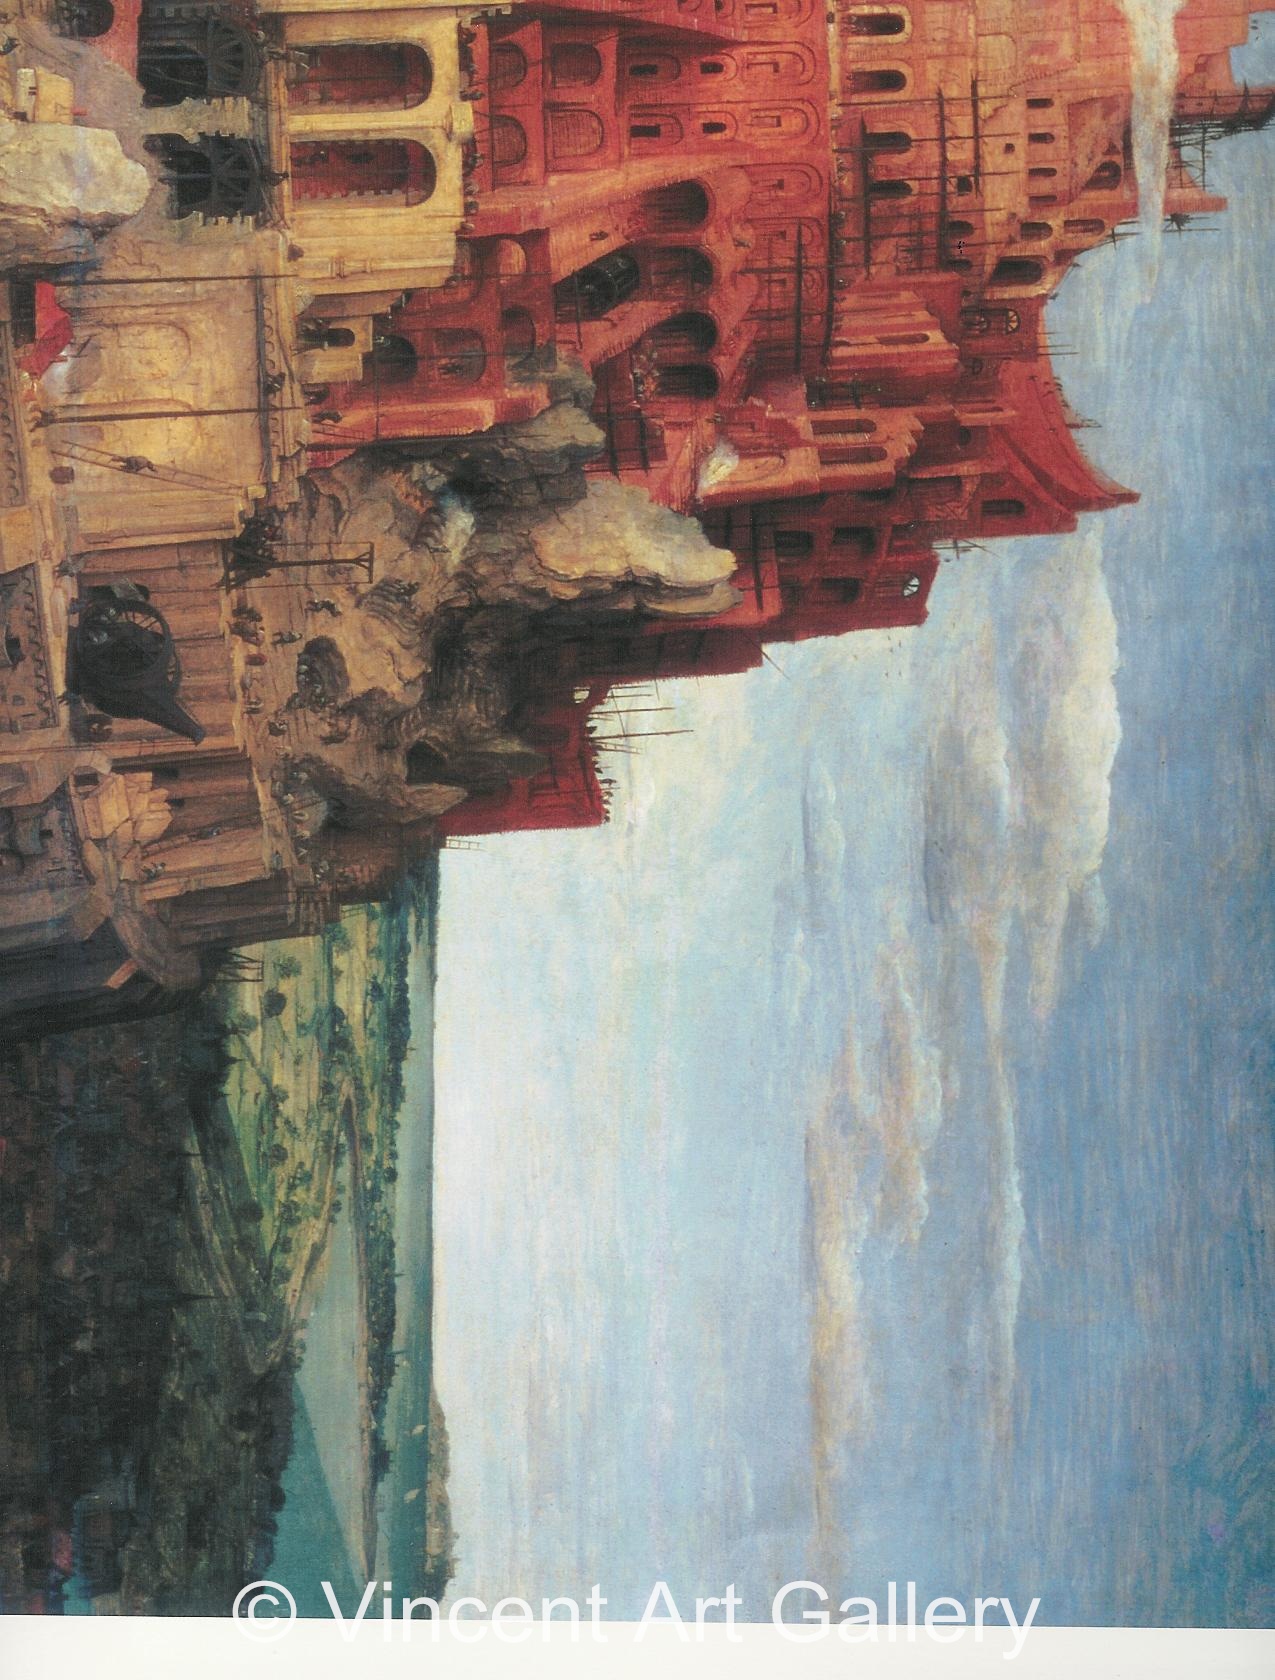 A116, BRUEGEL, The Tower of Babel, detail 1